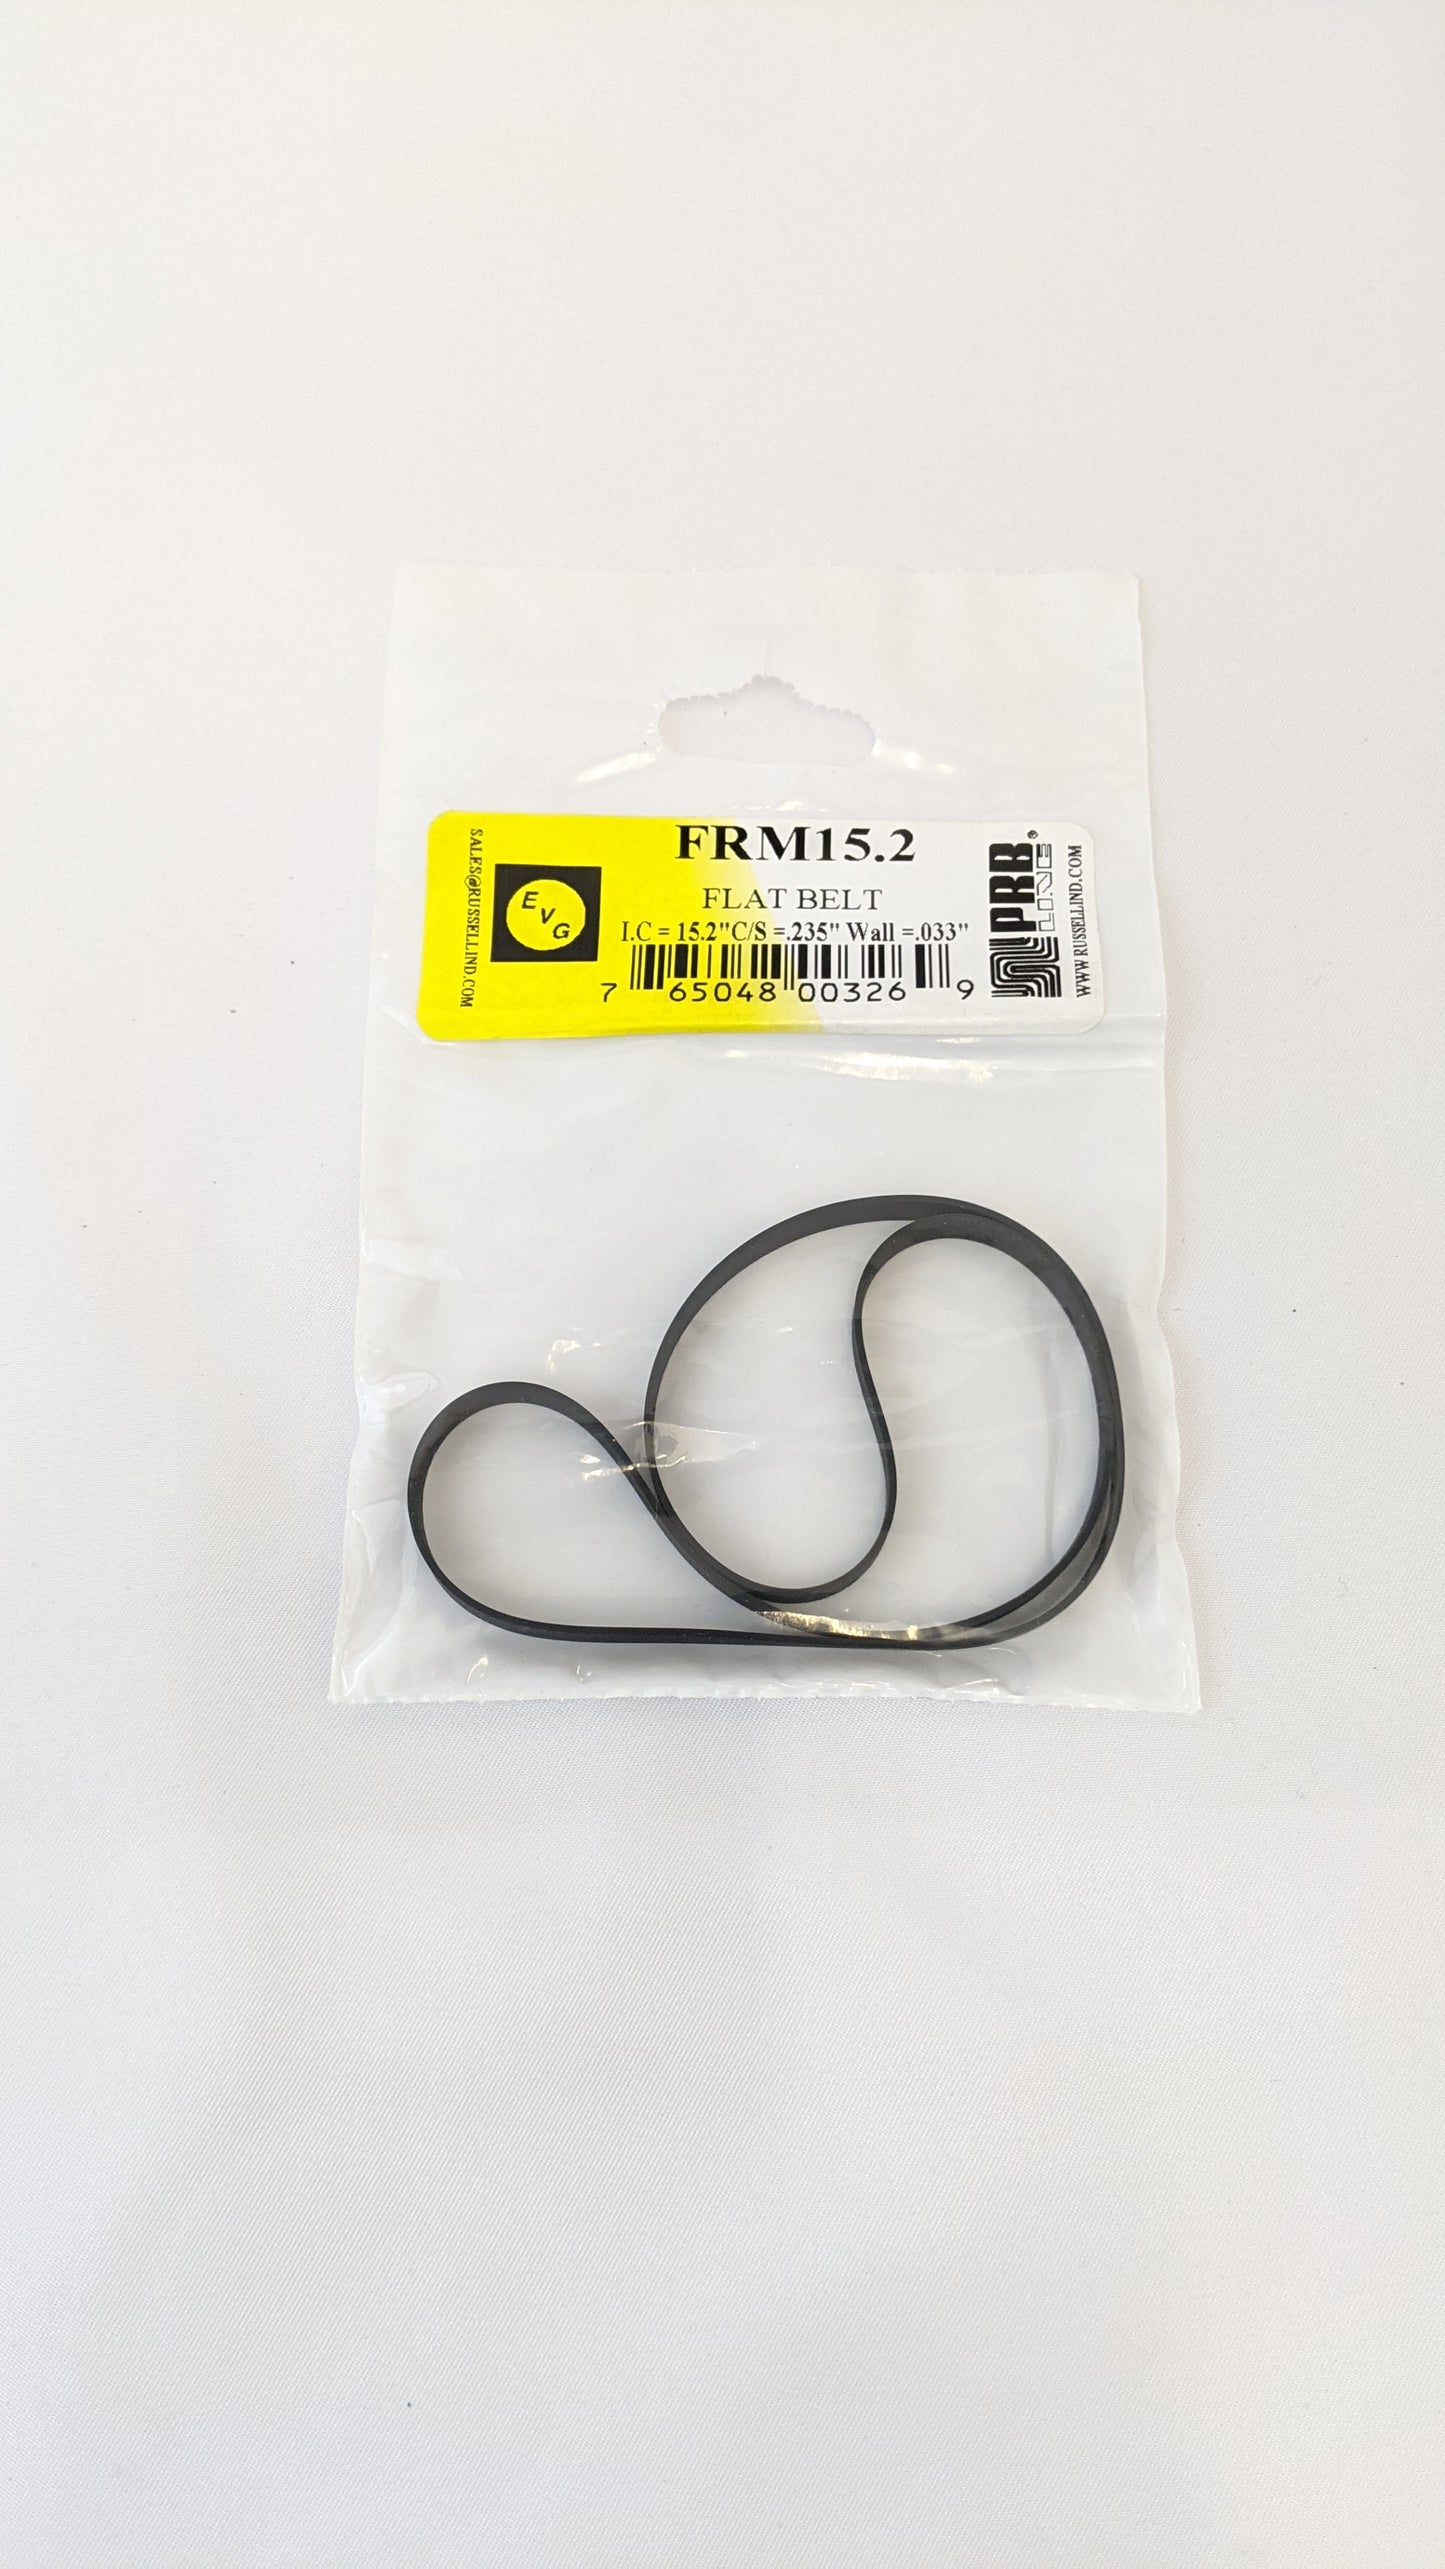 PRB FRM15.2, turntable belt, 15.200 x 0.235 x 0.033